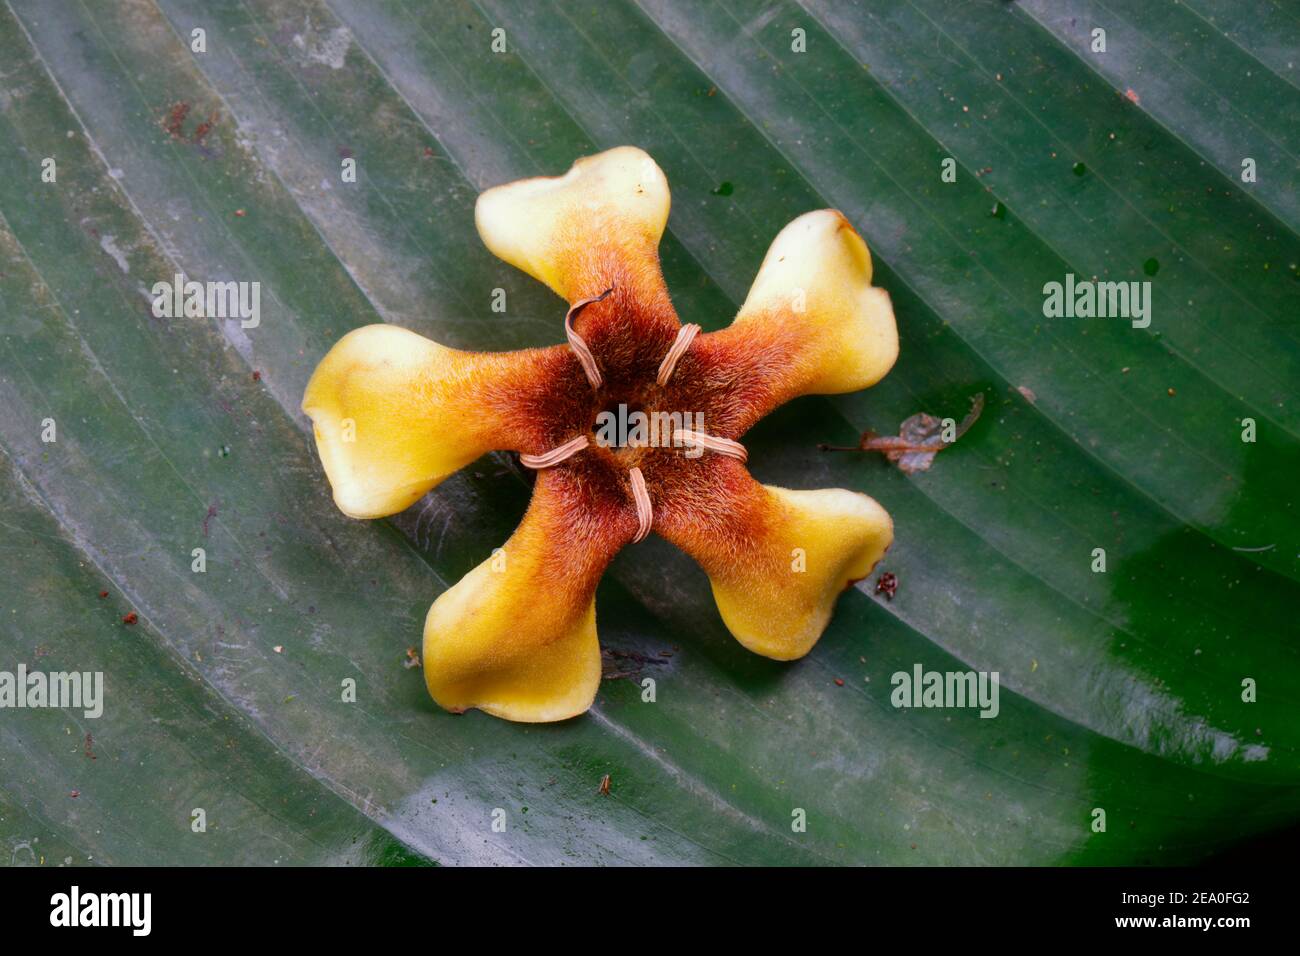 A fallen flower on a leaf. Stock Photo